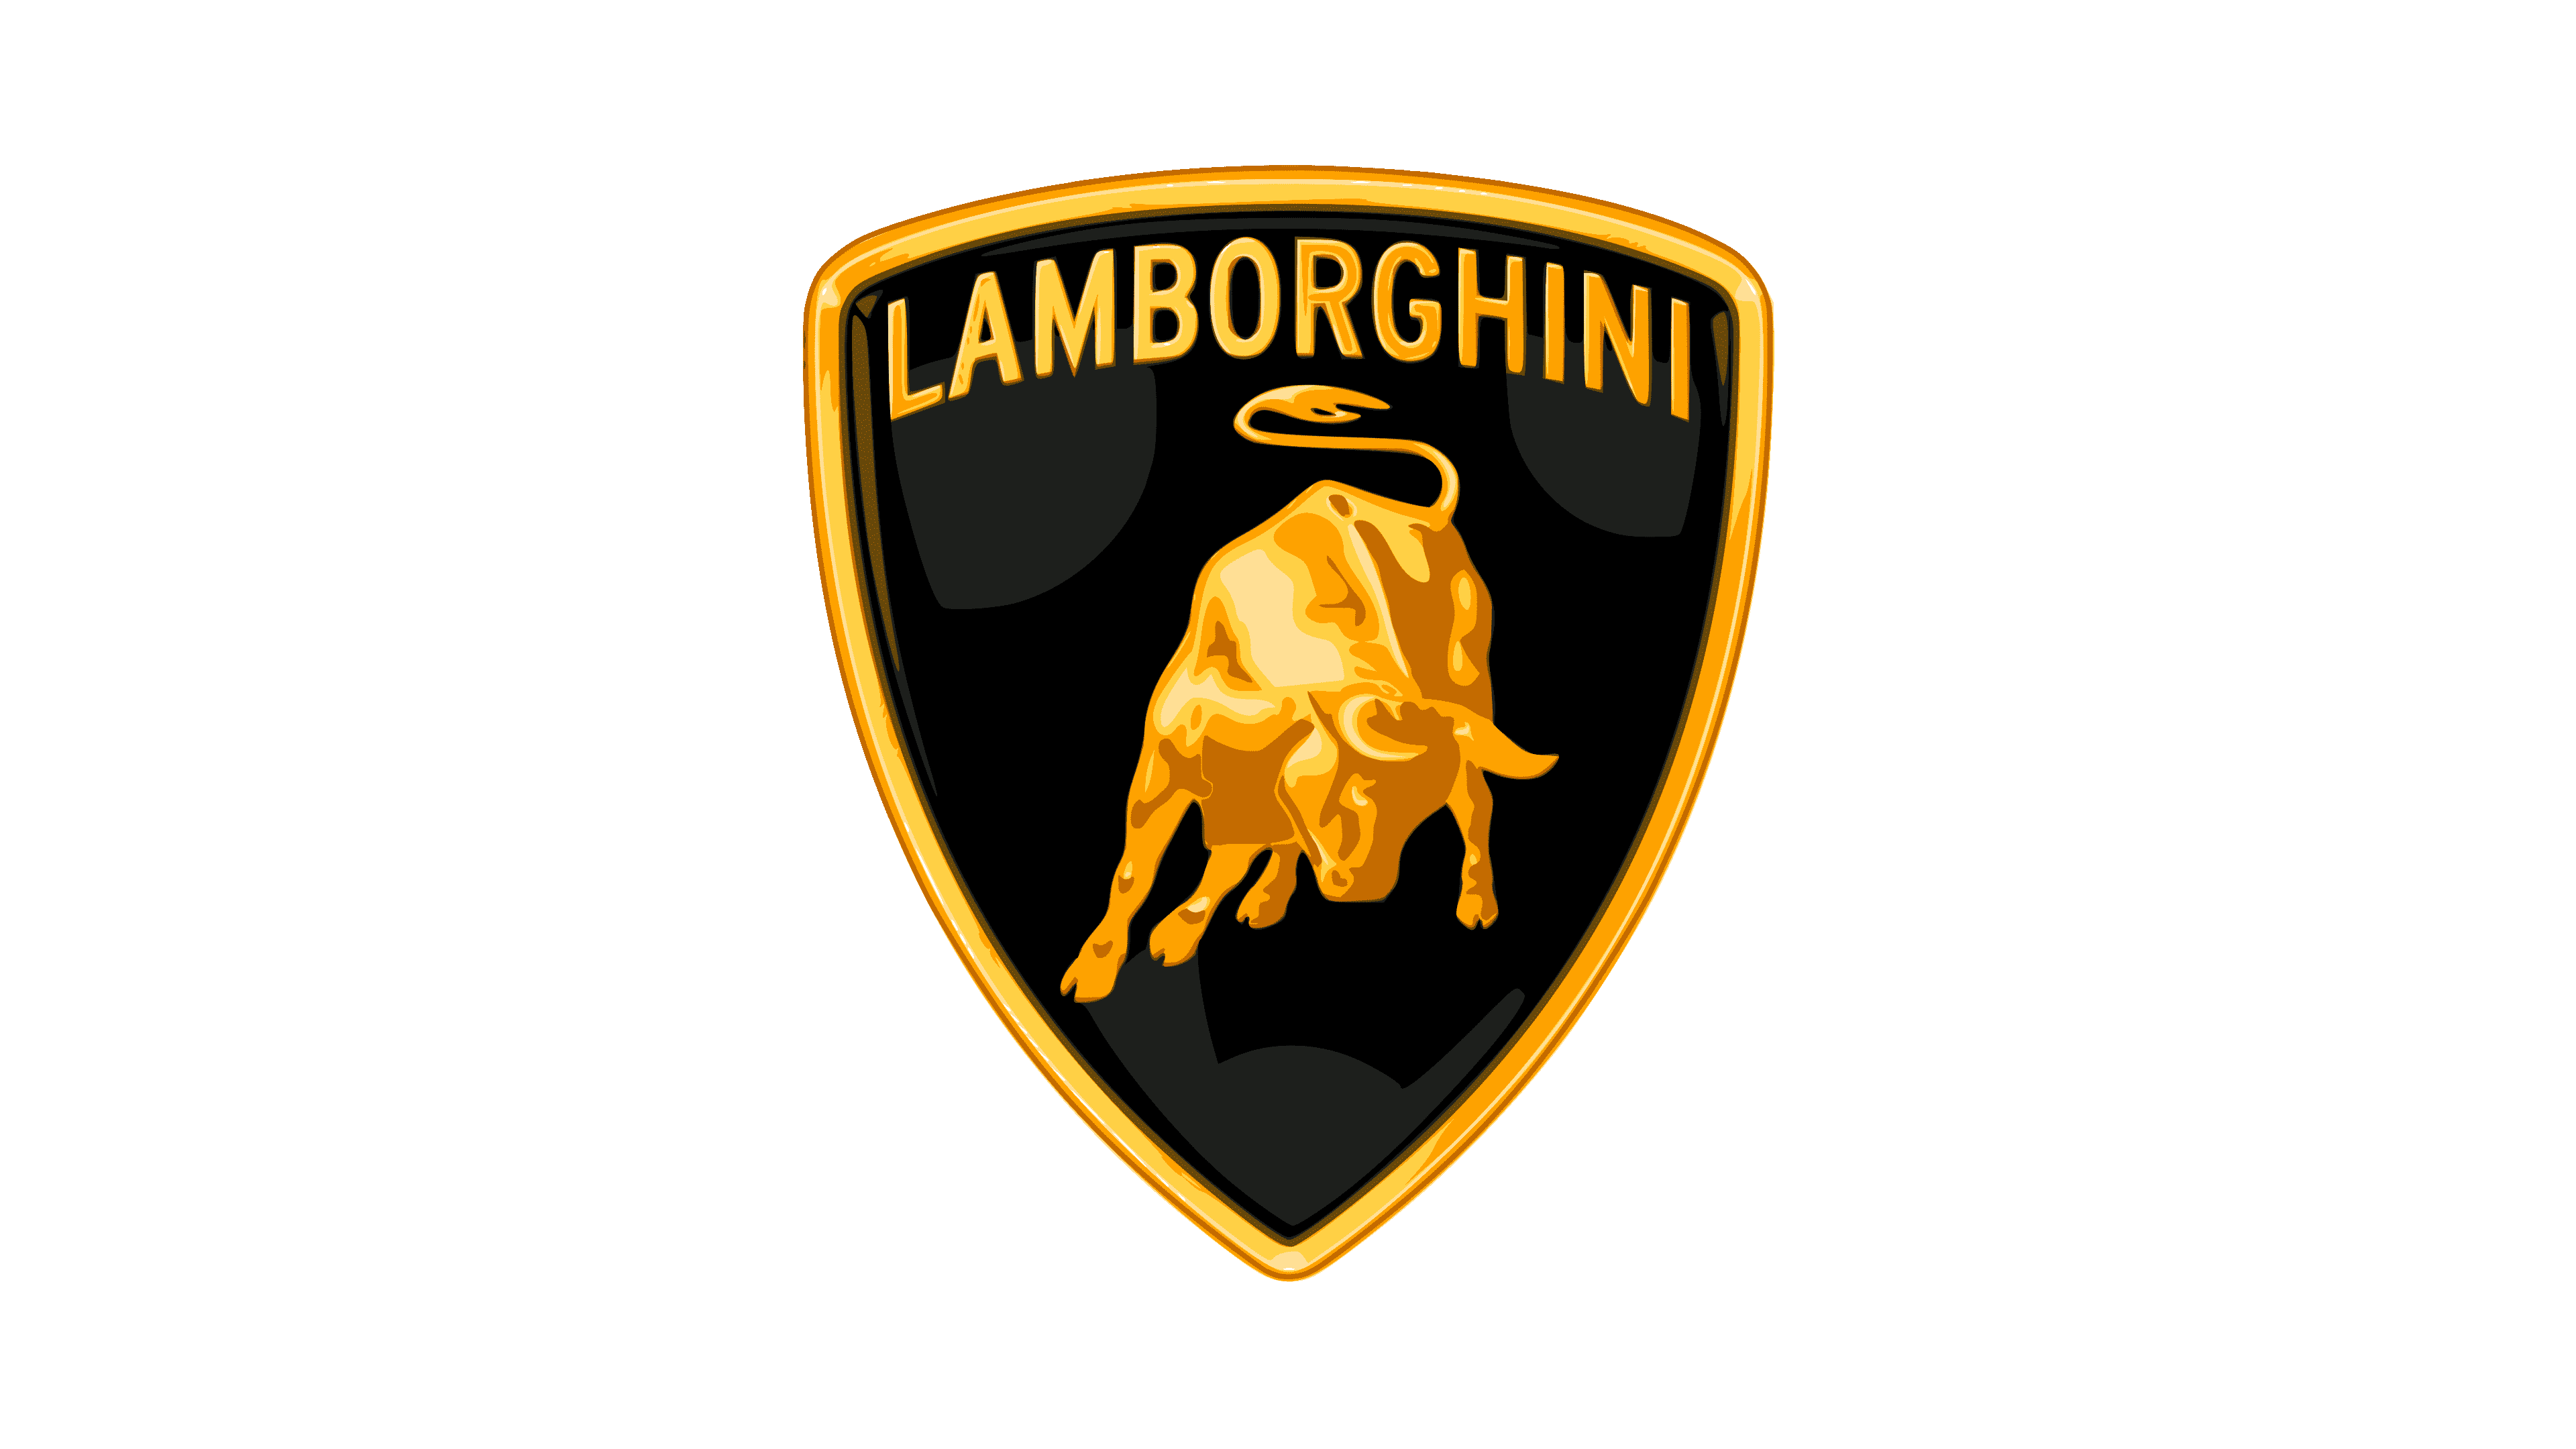 italian manufacturer of cars logos